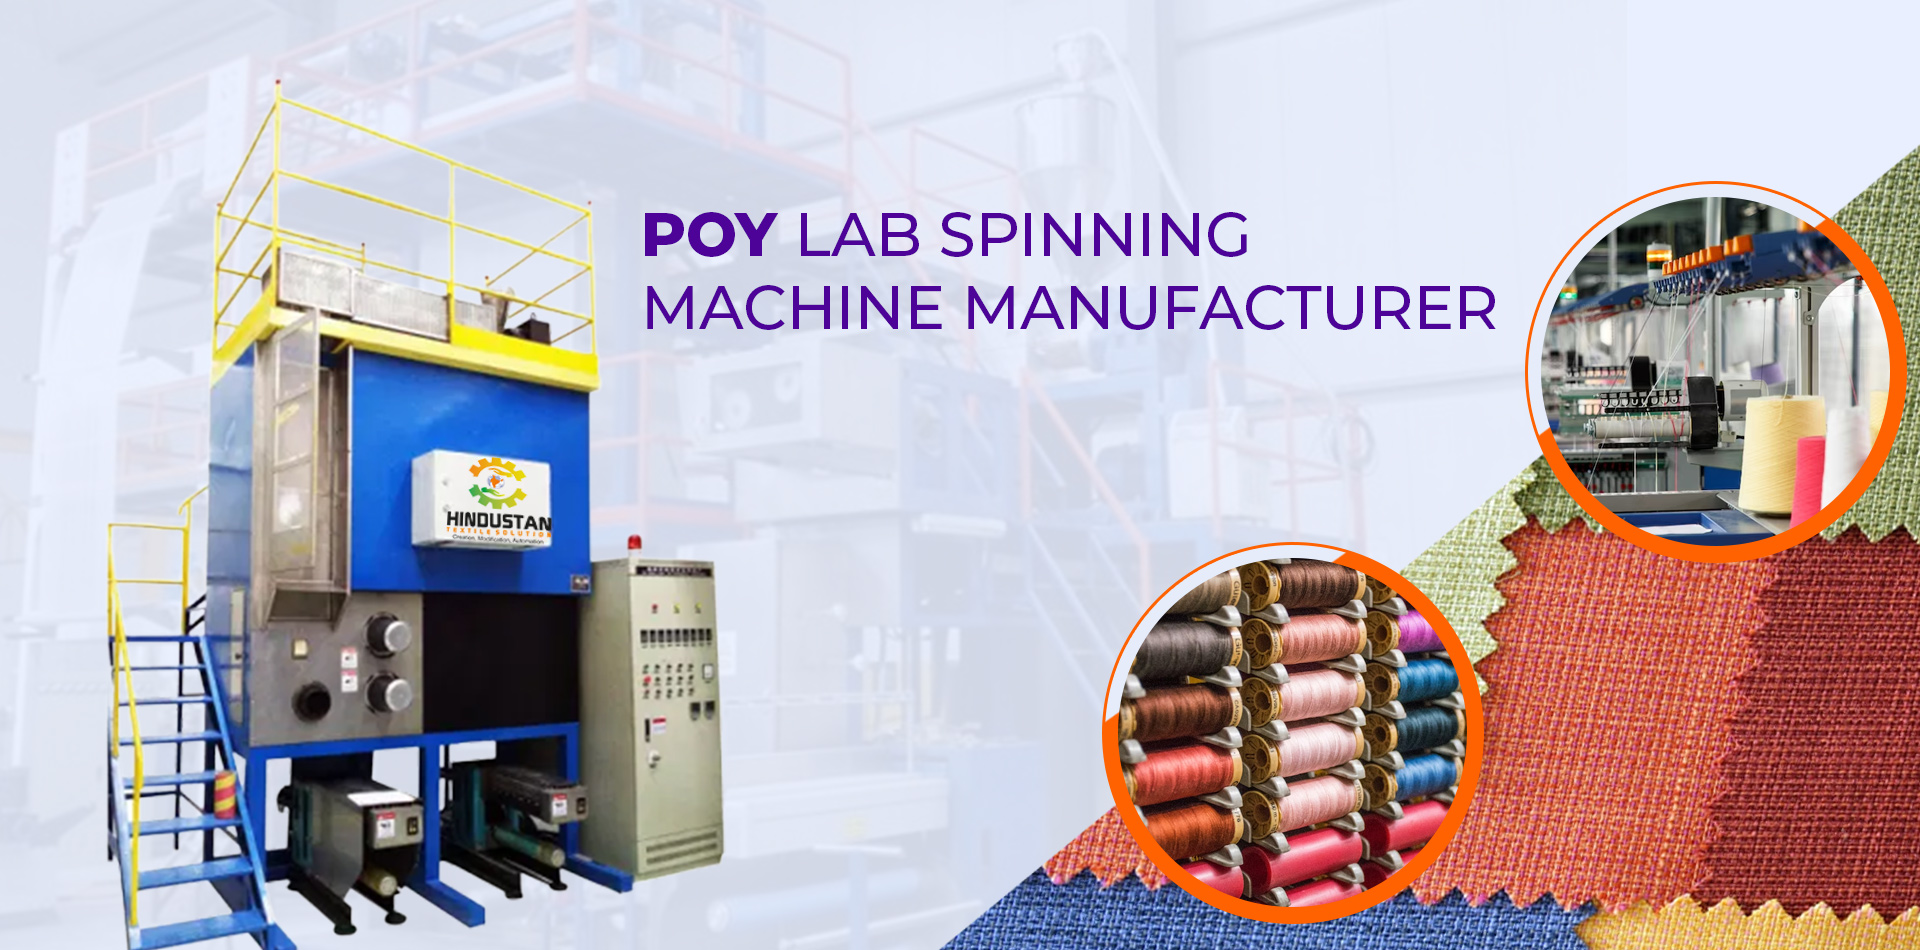 Poly lab Spinning Machine manufacturer